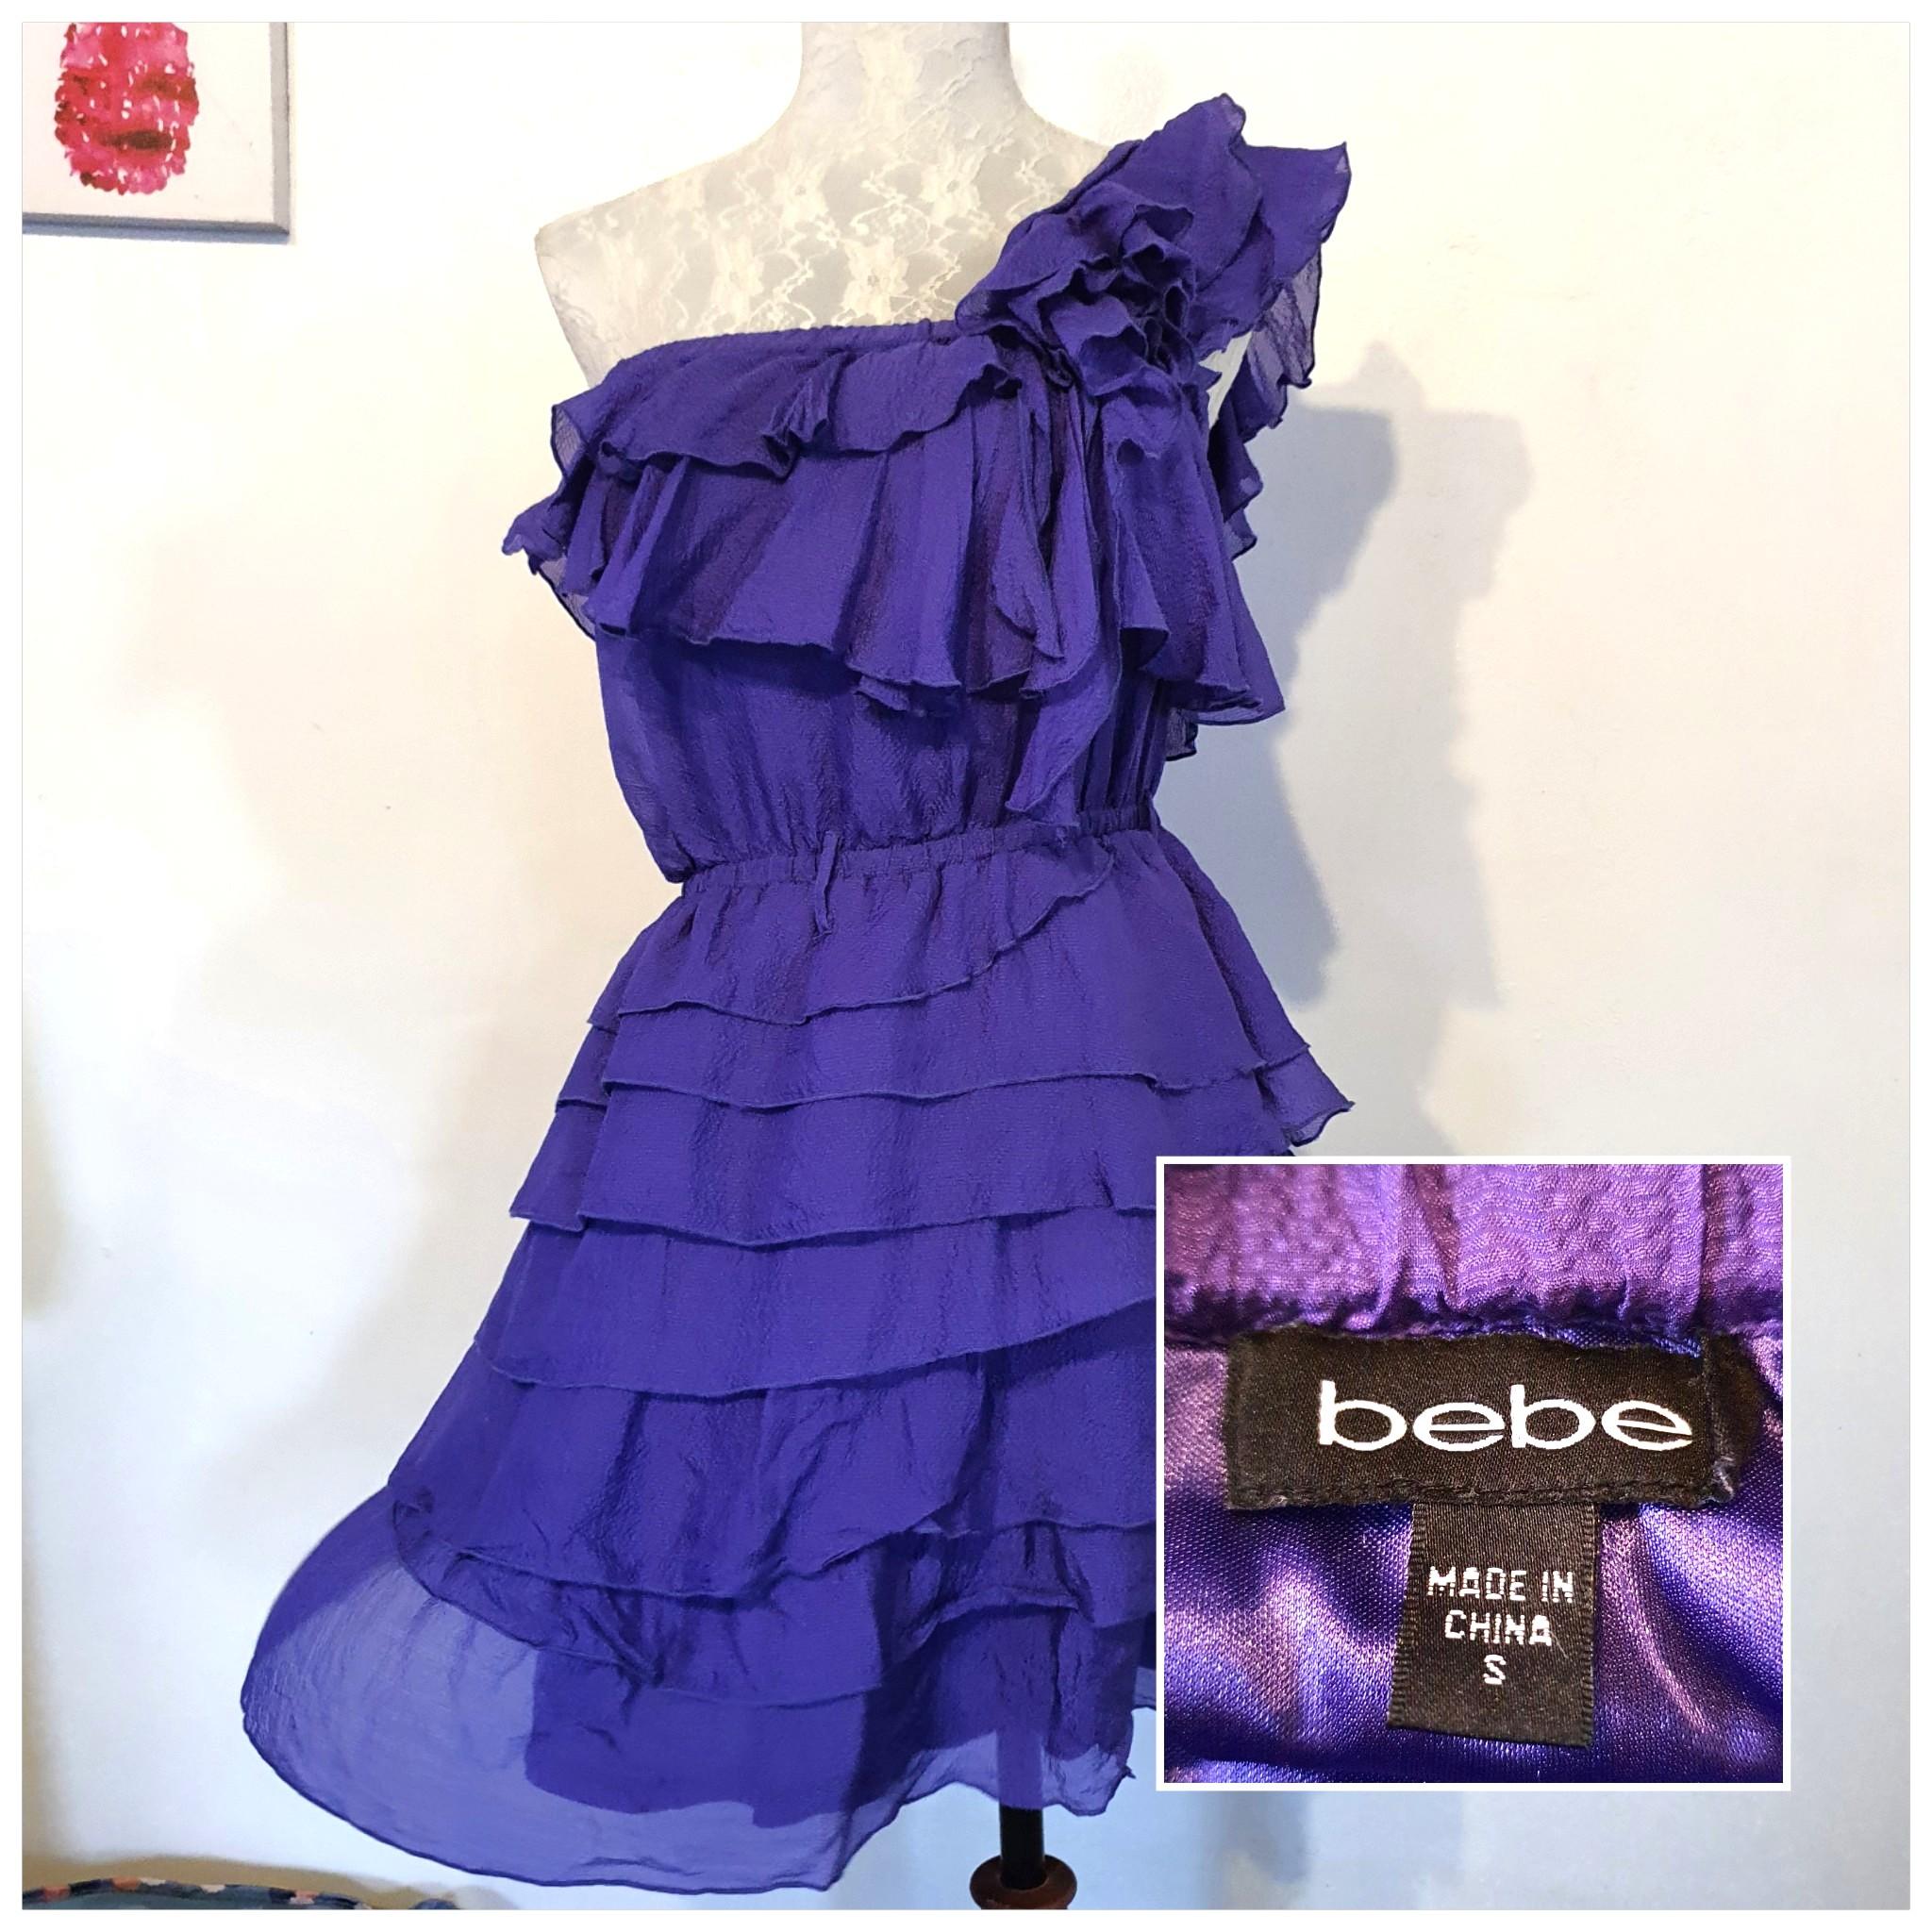 Bebe Silk One Side Shoulder Purple Dress Women S Fashion Dresses Sets Dresses On Carousell